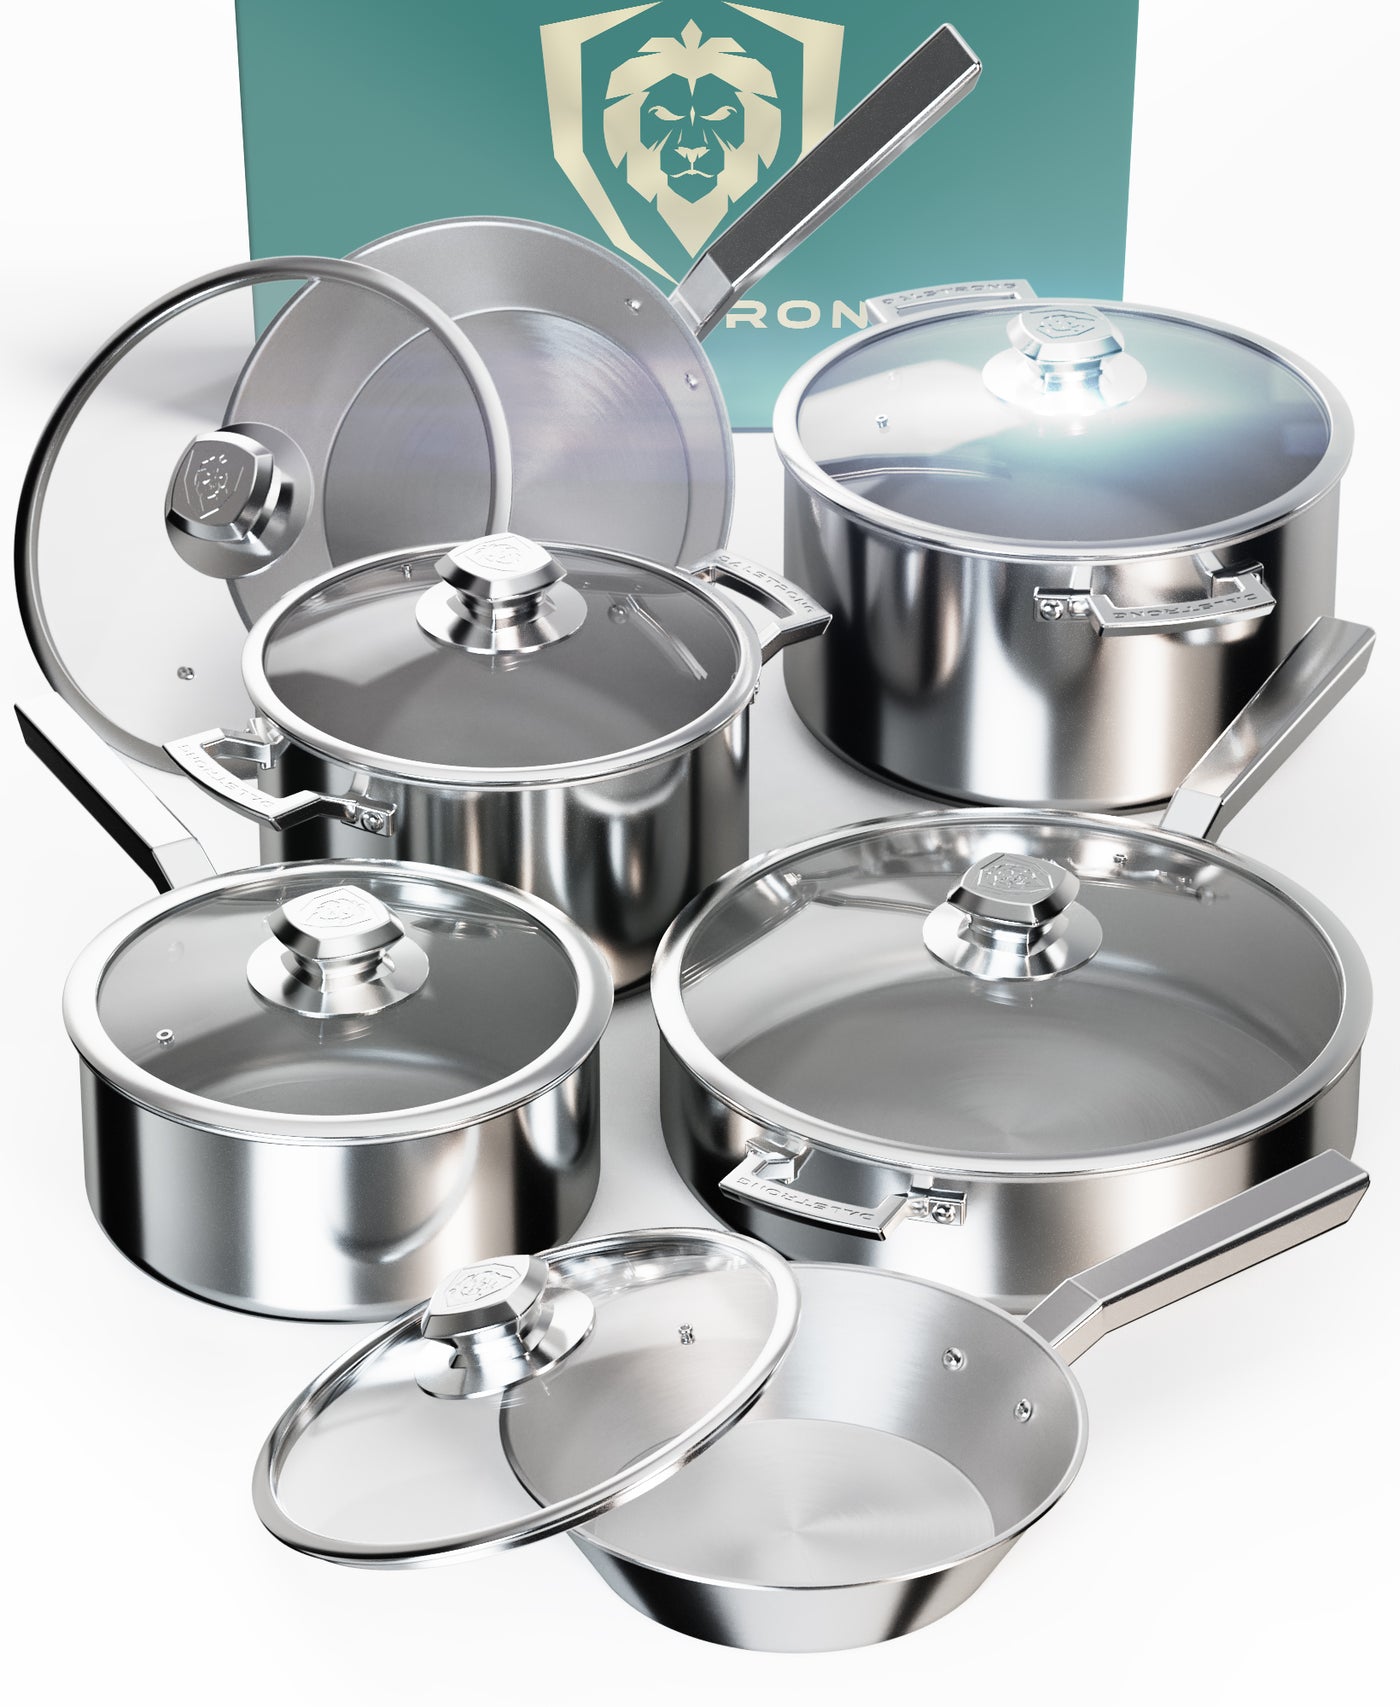 12 Piece Cookware Set | Oberon Series | Dalstrong ©